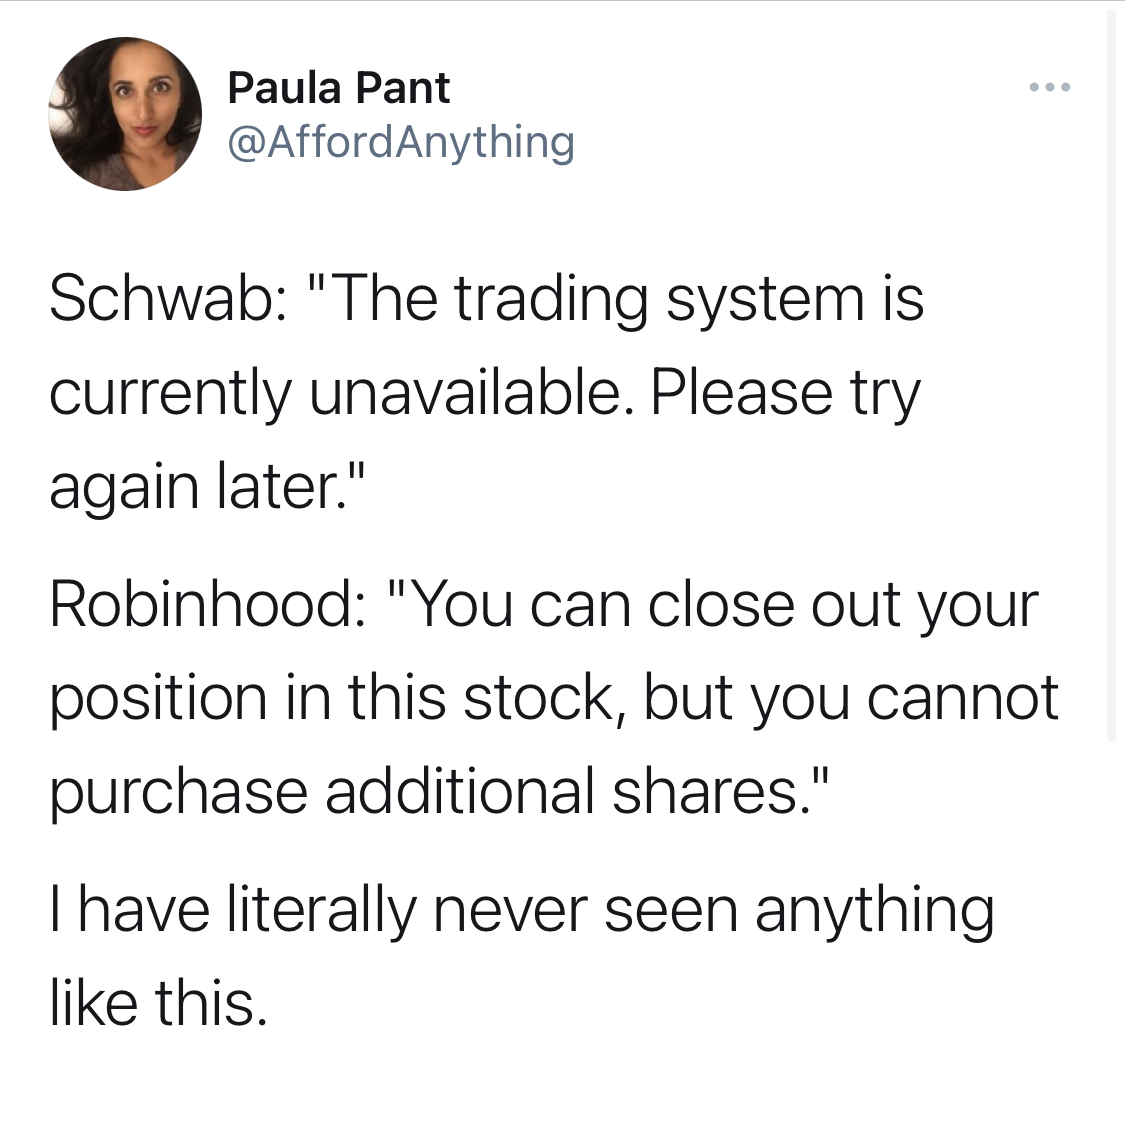 Robinhood and Schwab shutting down - never seen anything like this tweet